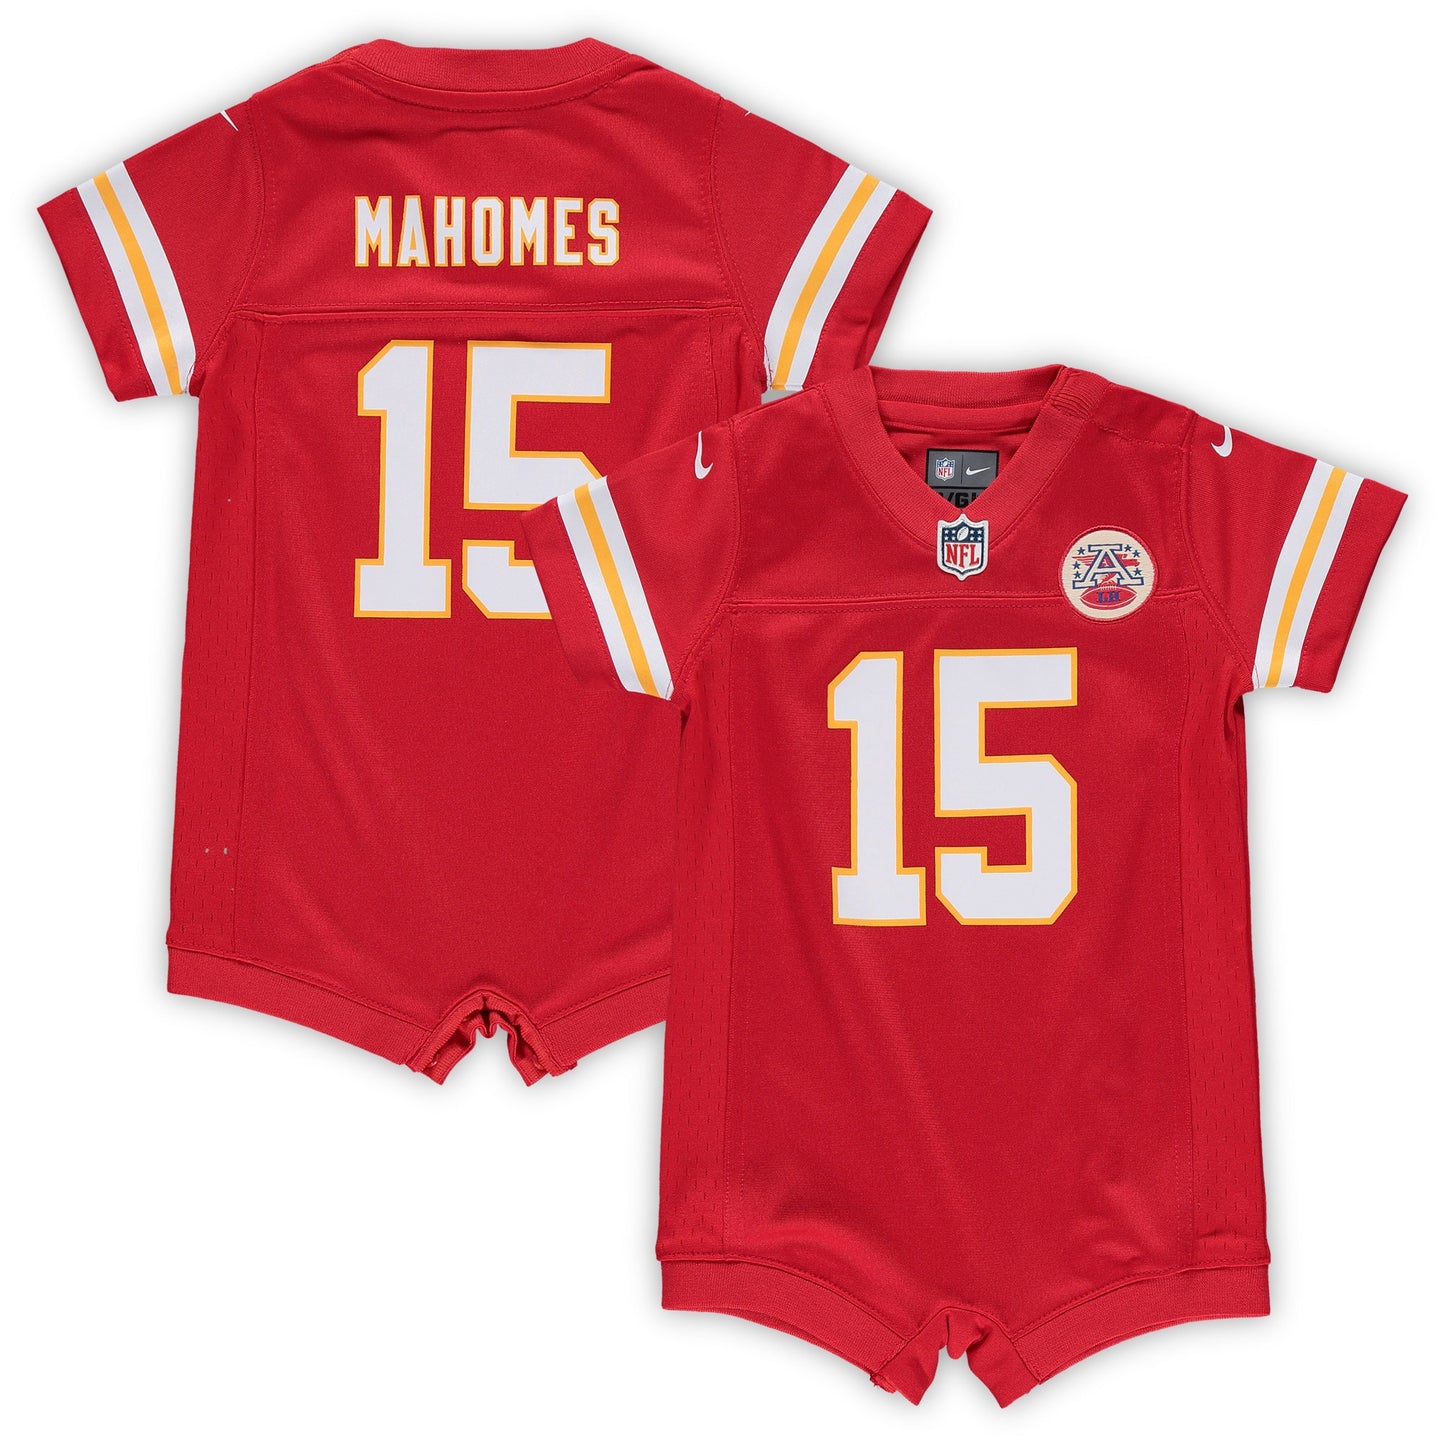 Patrick Mahomes Kansas City Chiefs Nike Infant Romper Jersey - Red